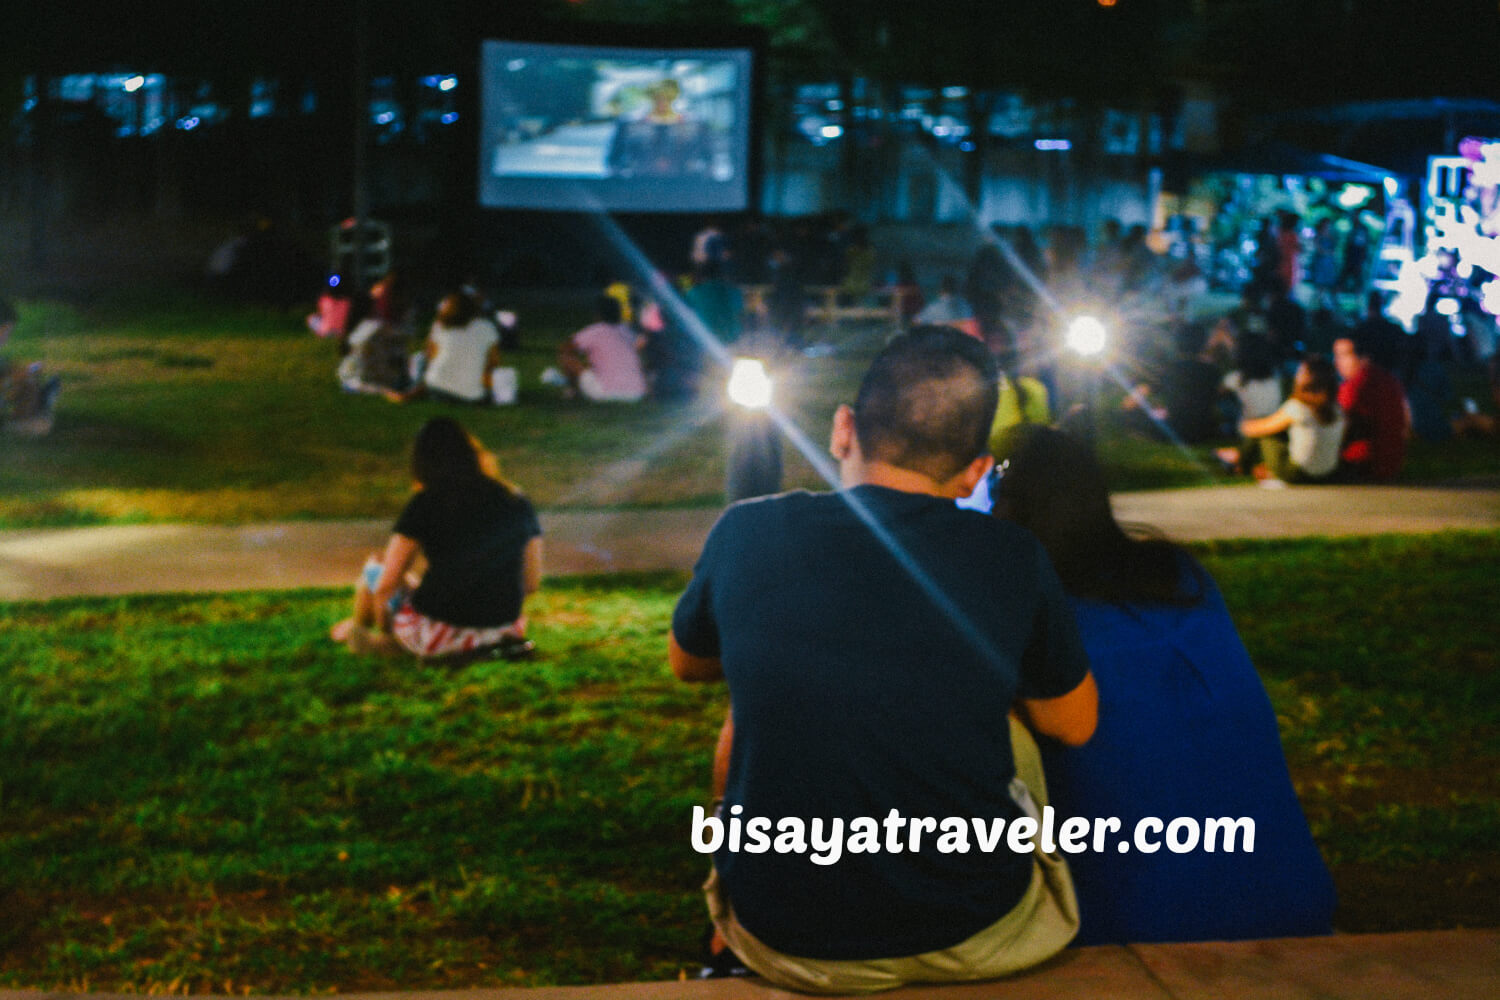 An Atmospheric Outdoor Movie Experience in Ayala Center, Cebu